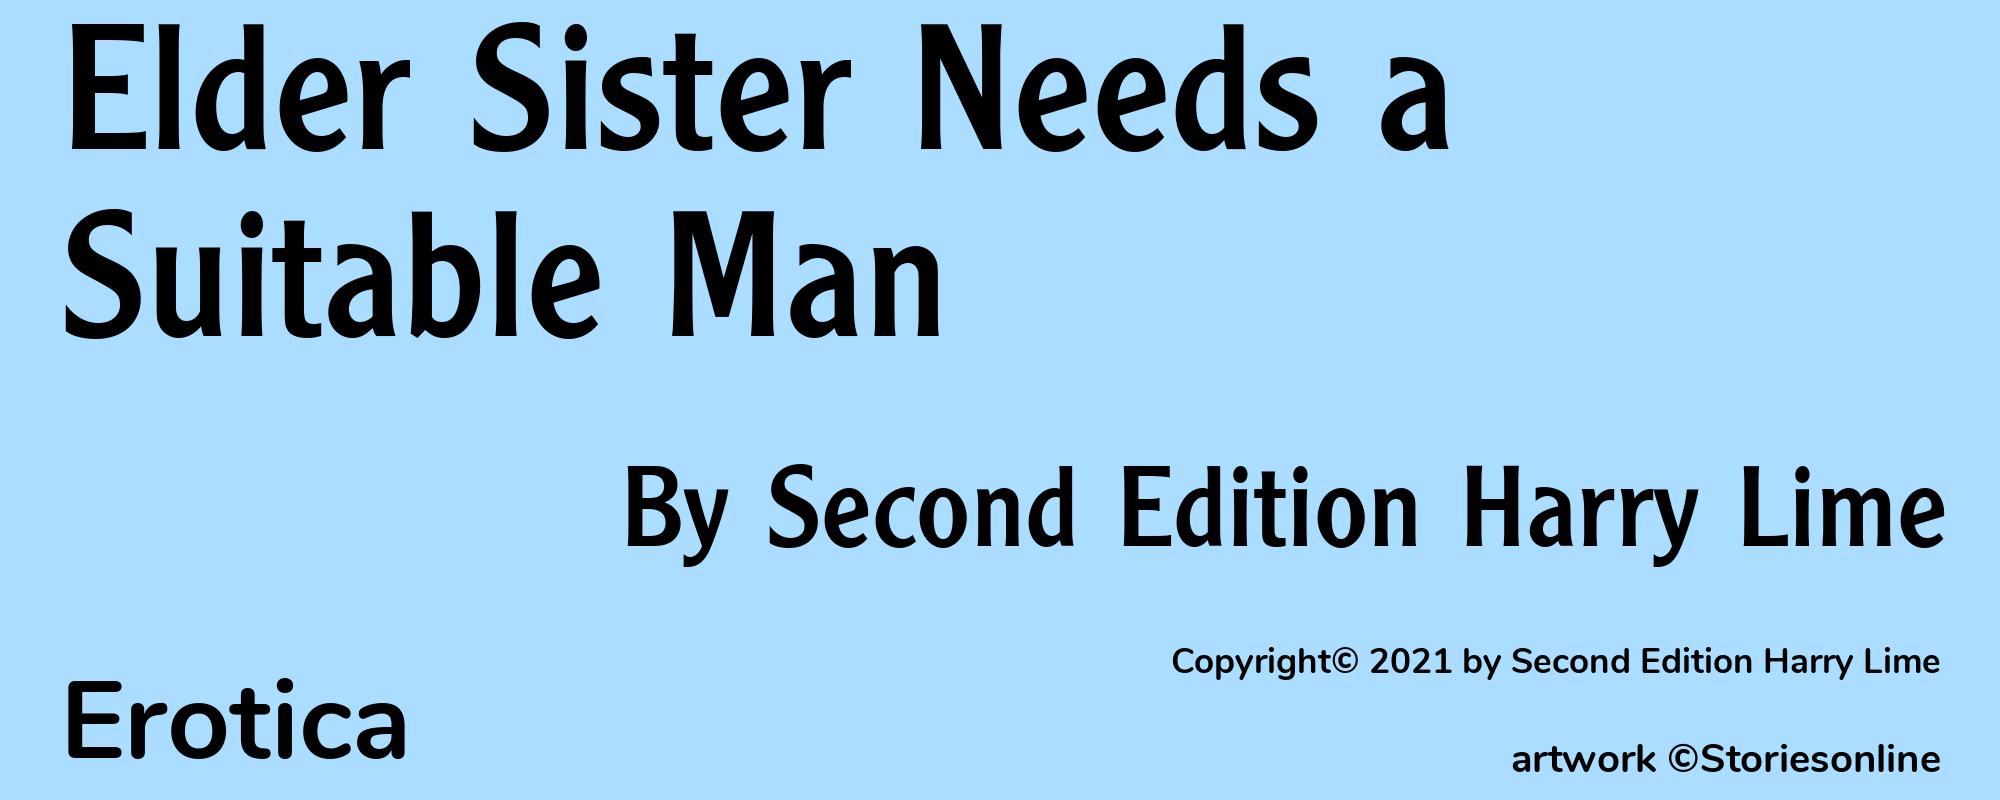 Elder Sister Needs a Suitable Man - Cover